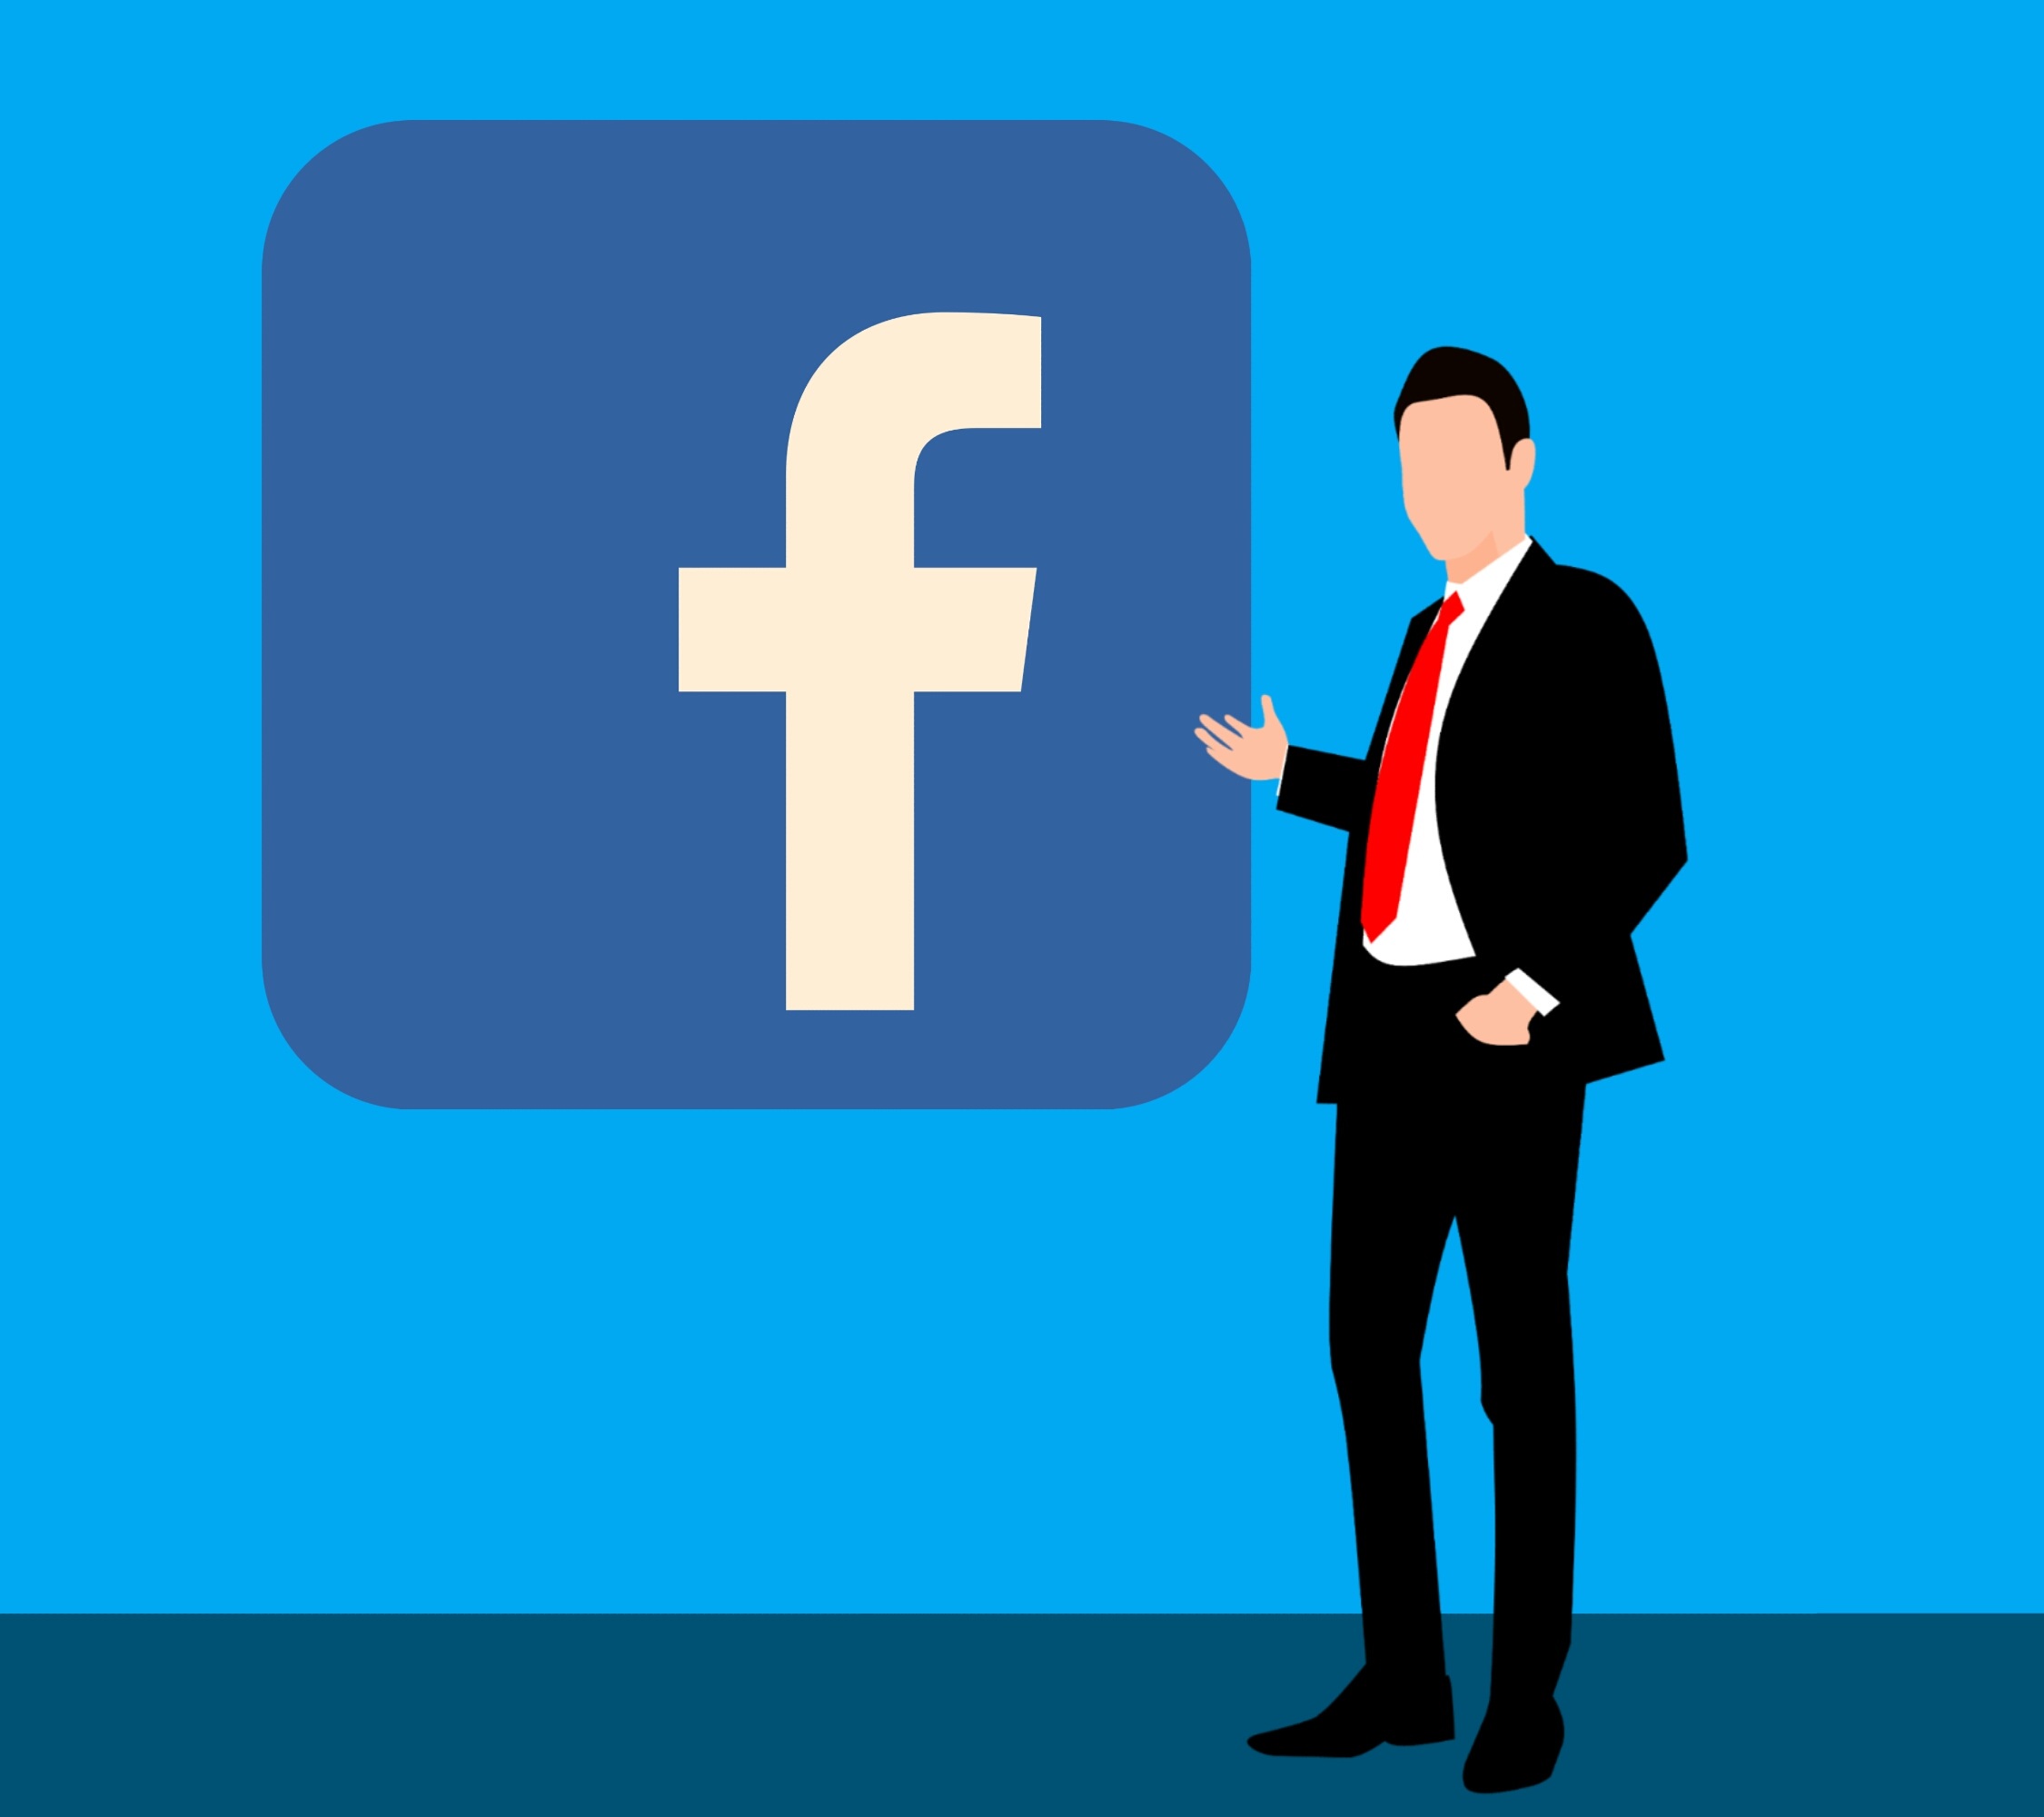 facebookbm购买 | 引领互联网巨头之间的竞争激烈化